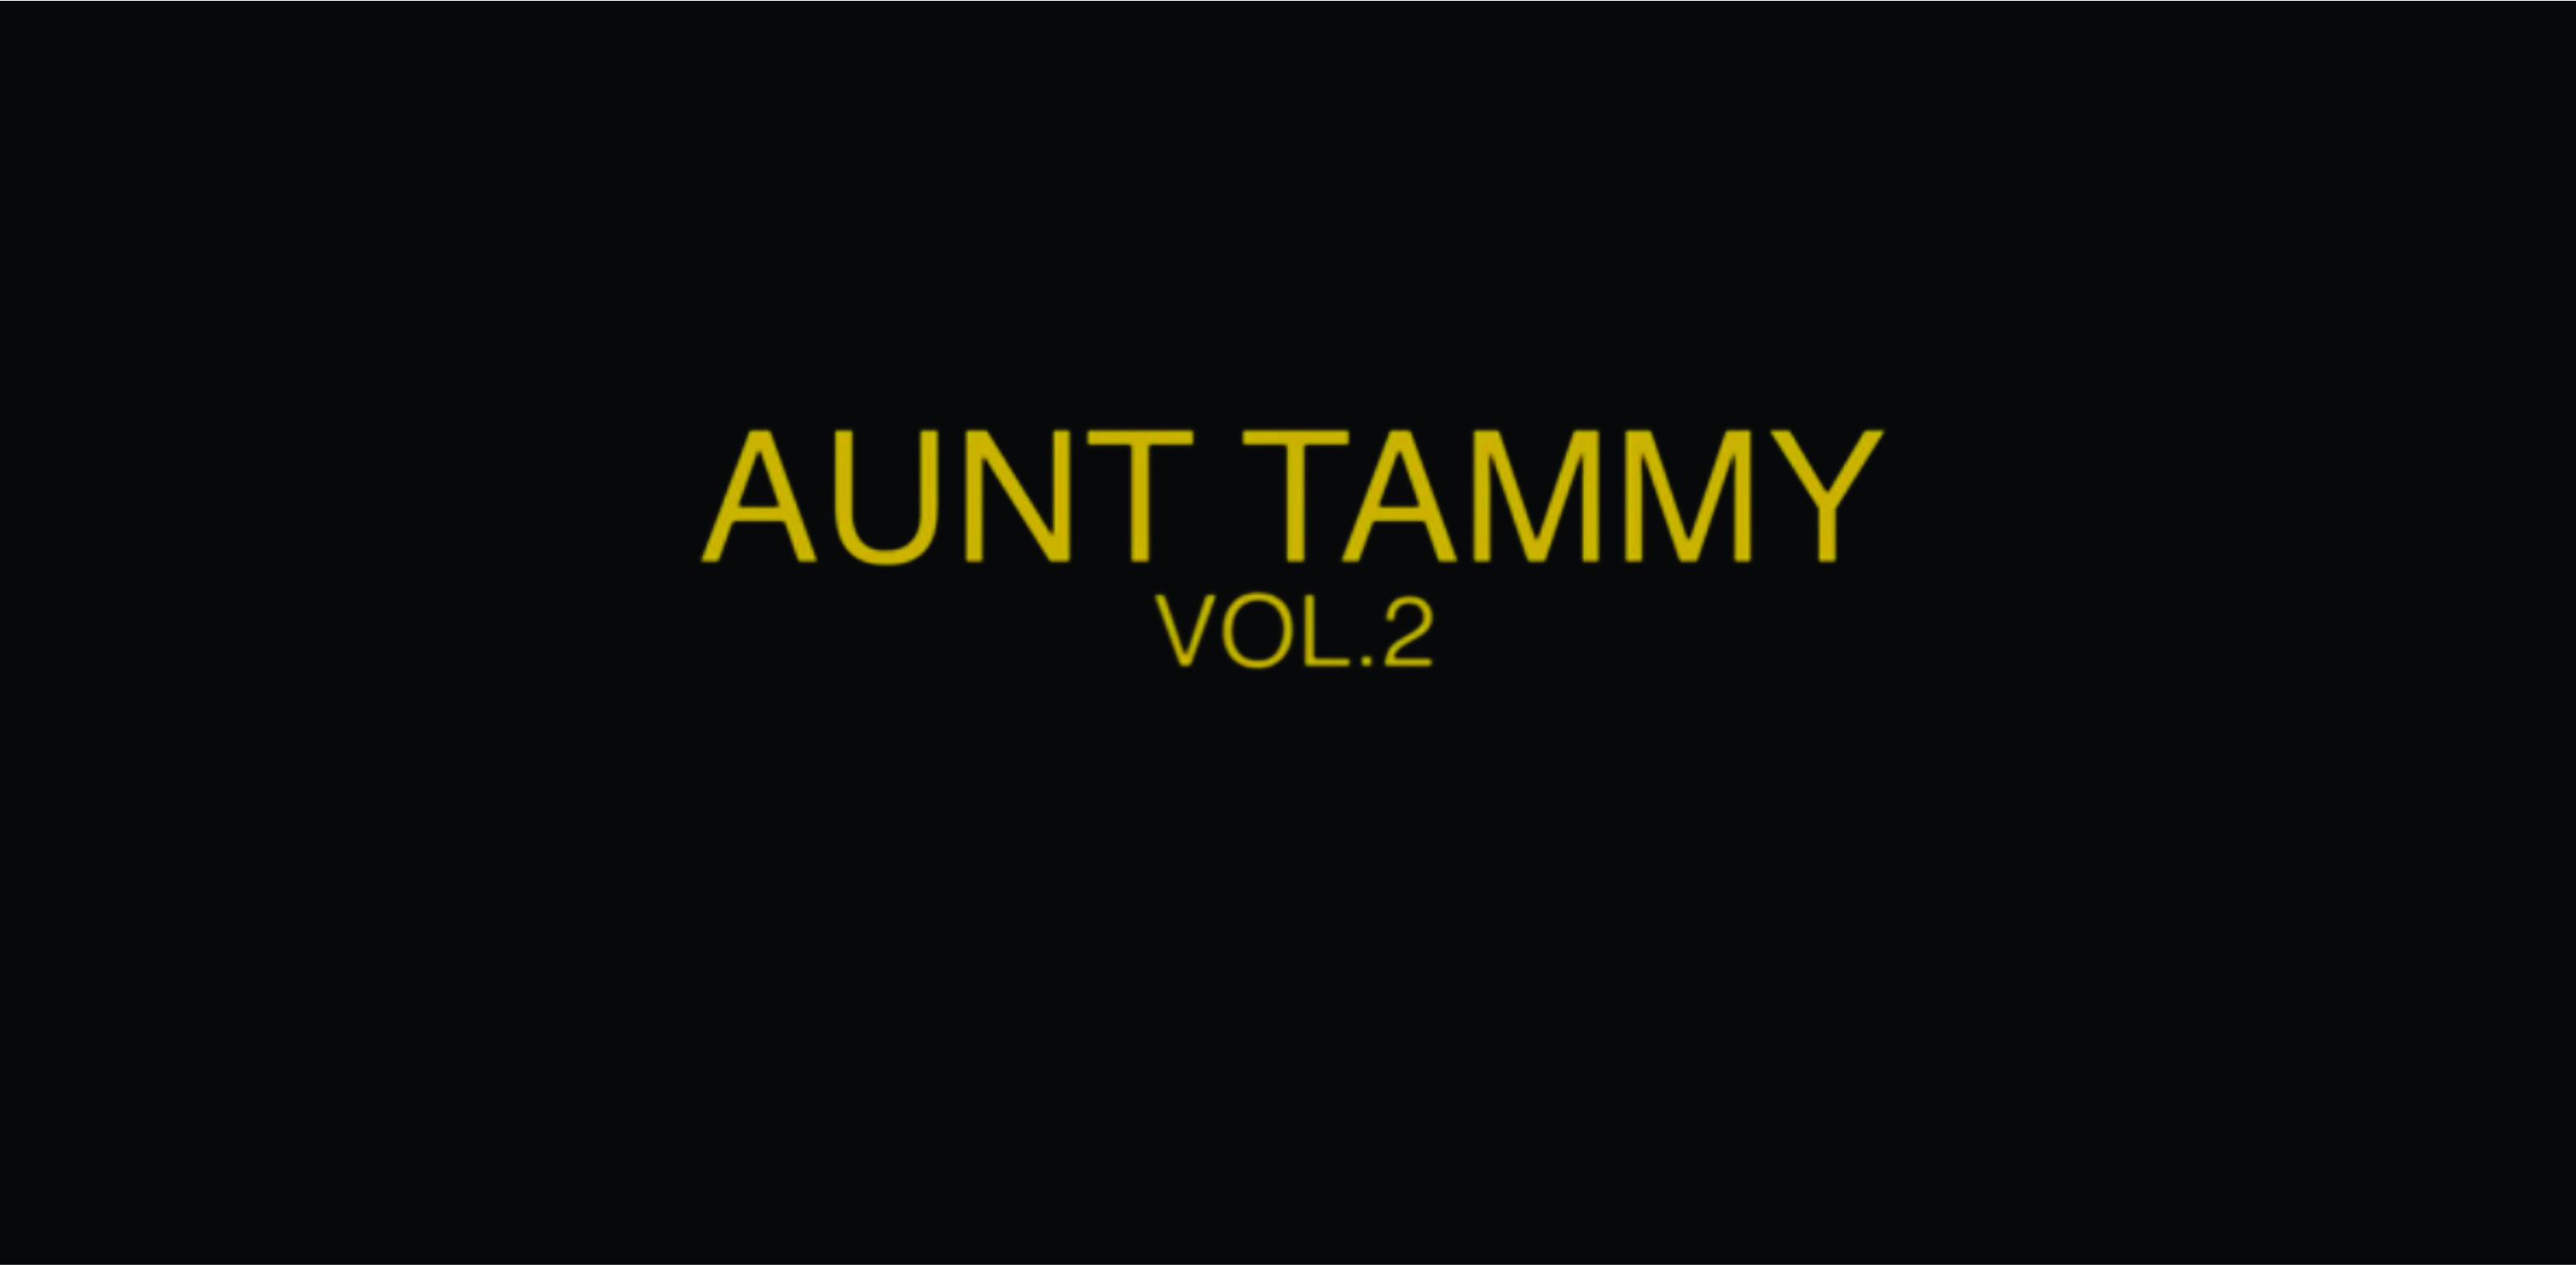 Skate Mental - Aunt Tammy Vol. 2 cover